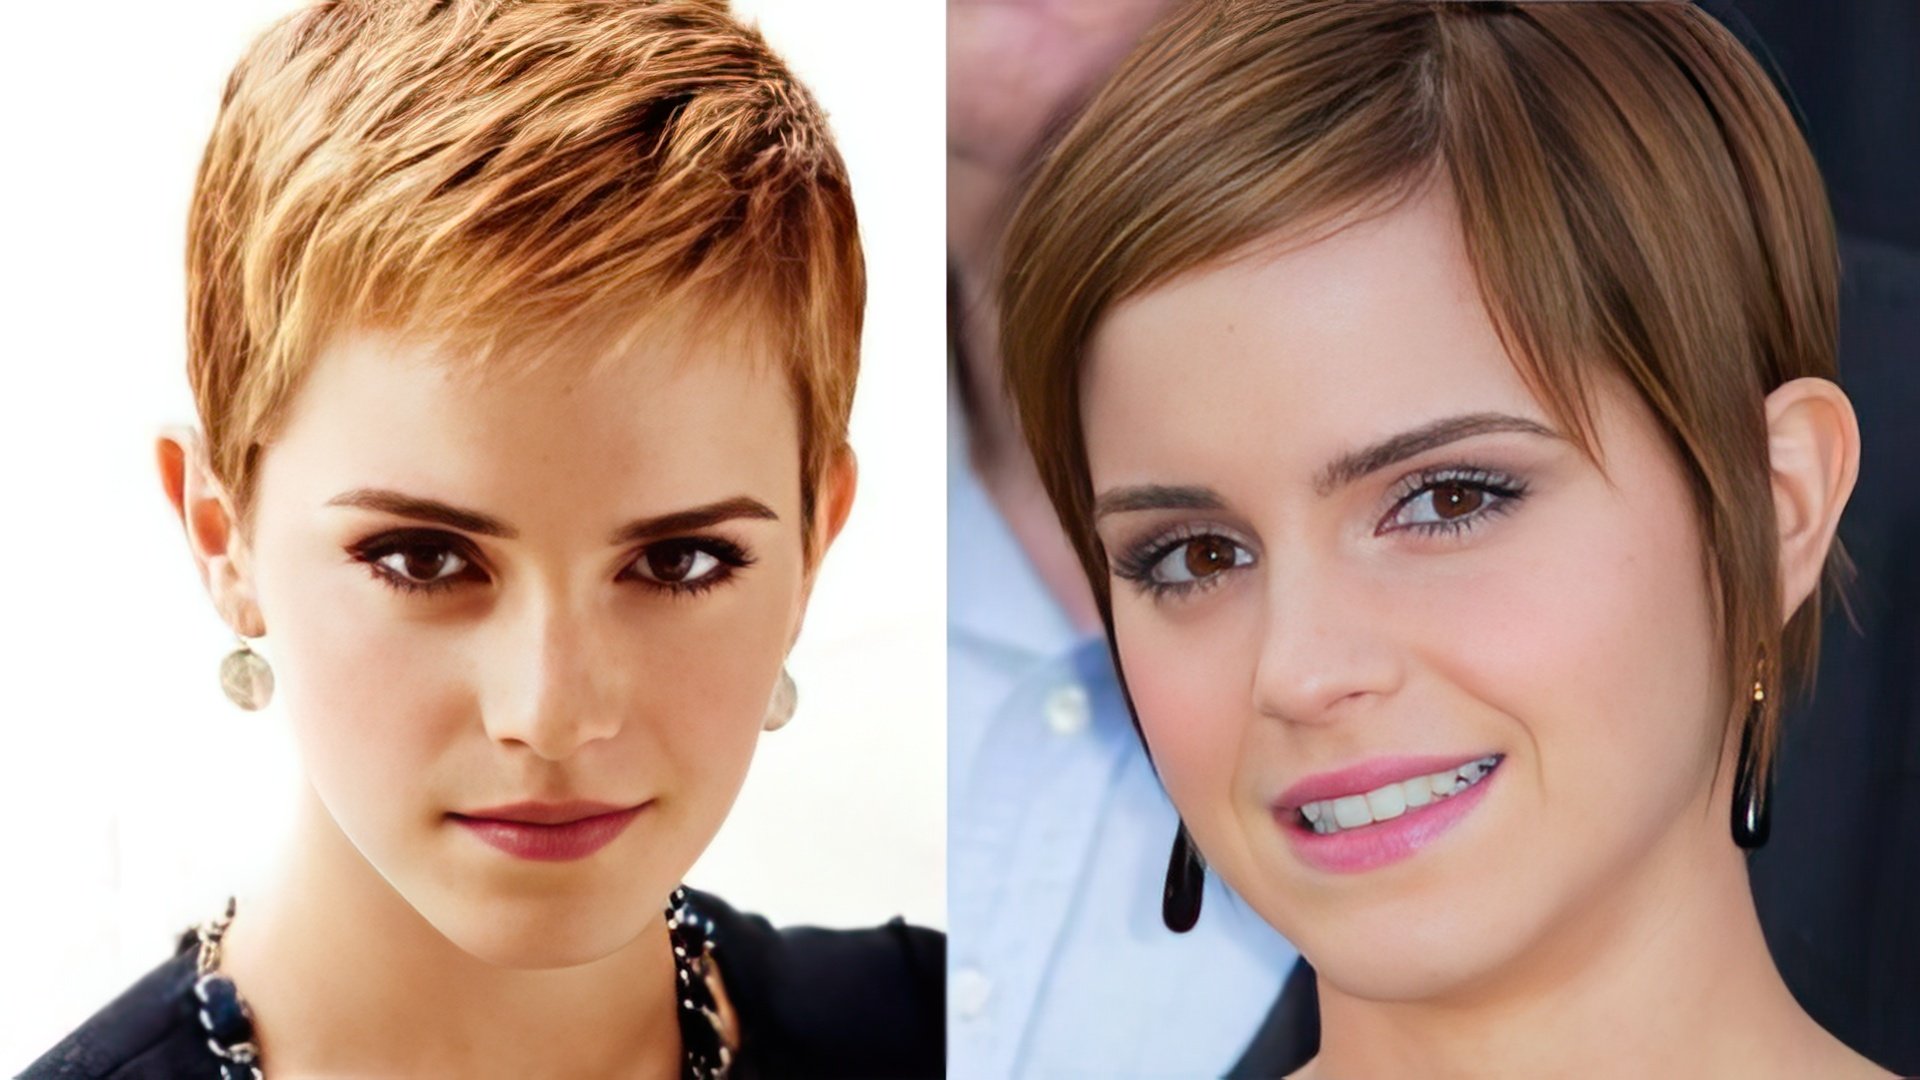 Emma Watson wore short hair